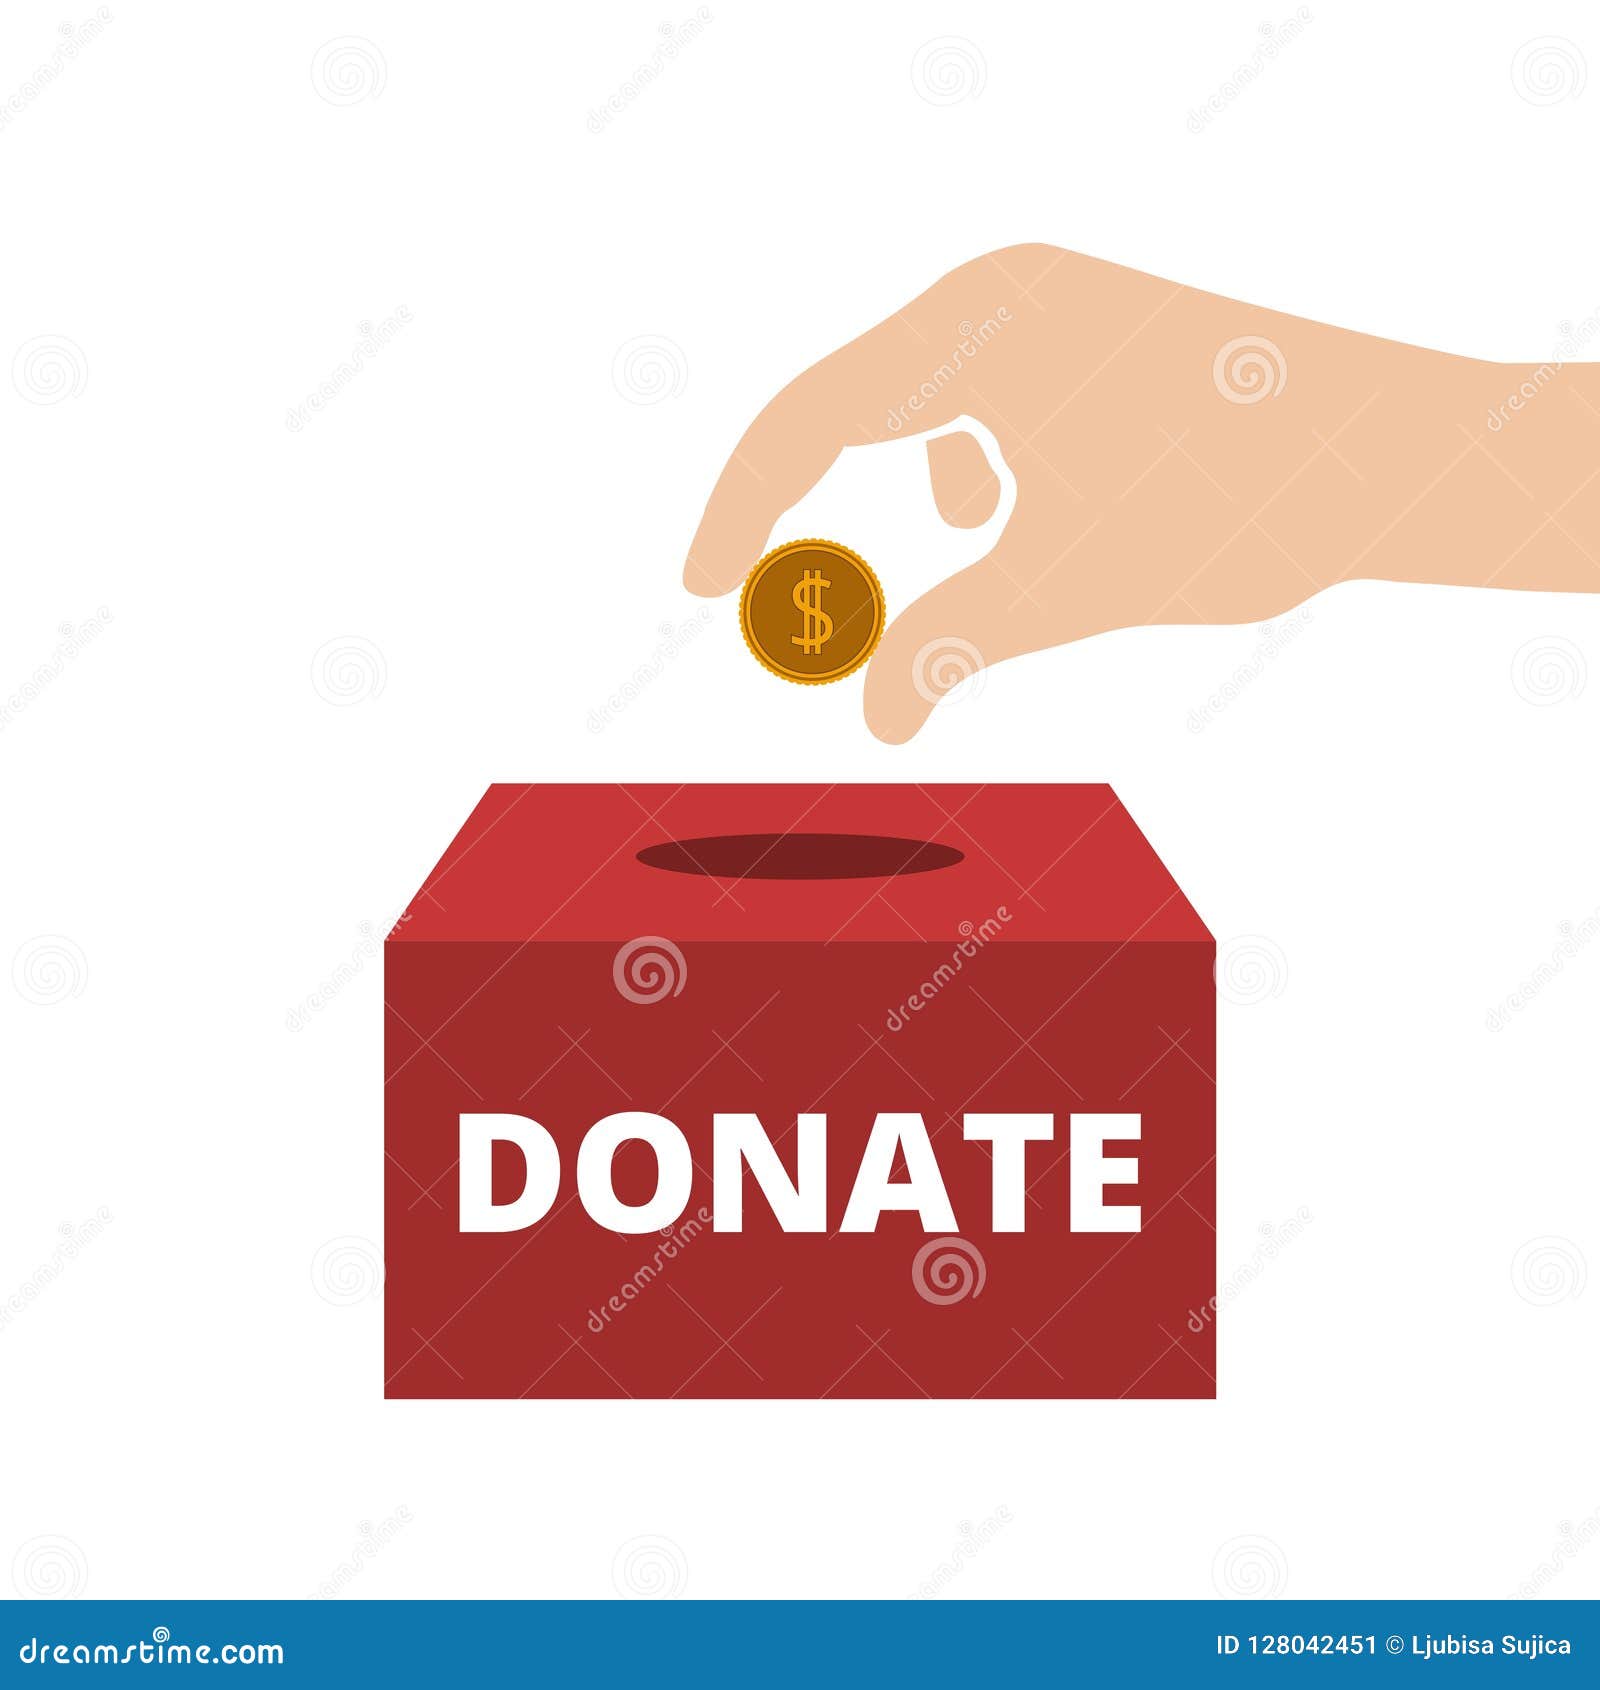 Сайт для доната дешево. Donate знак. Дешевый донат. Donation Box icon. Иконка для доната Viner.